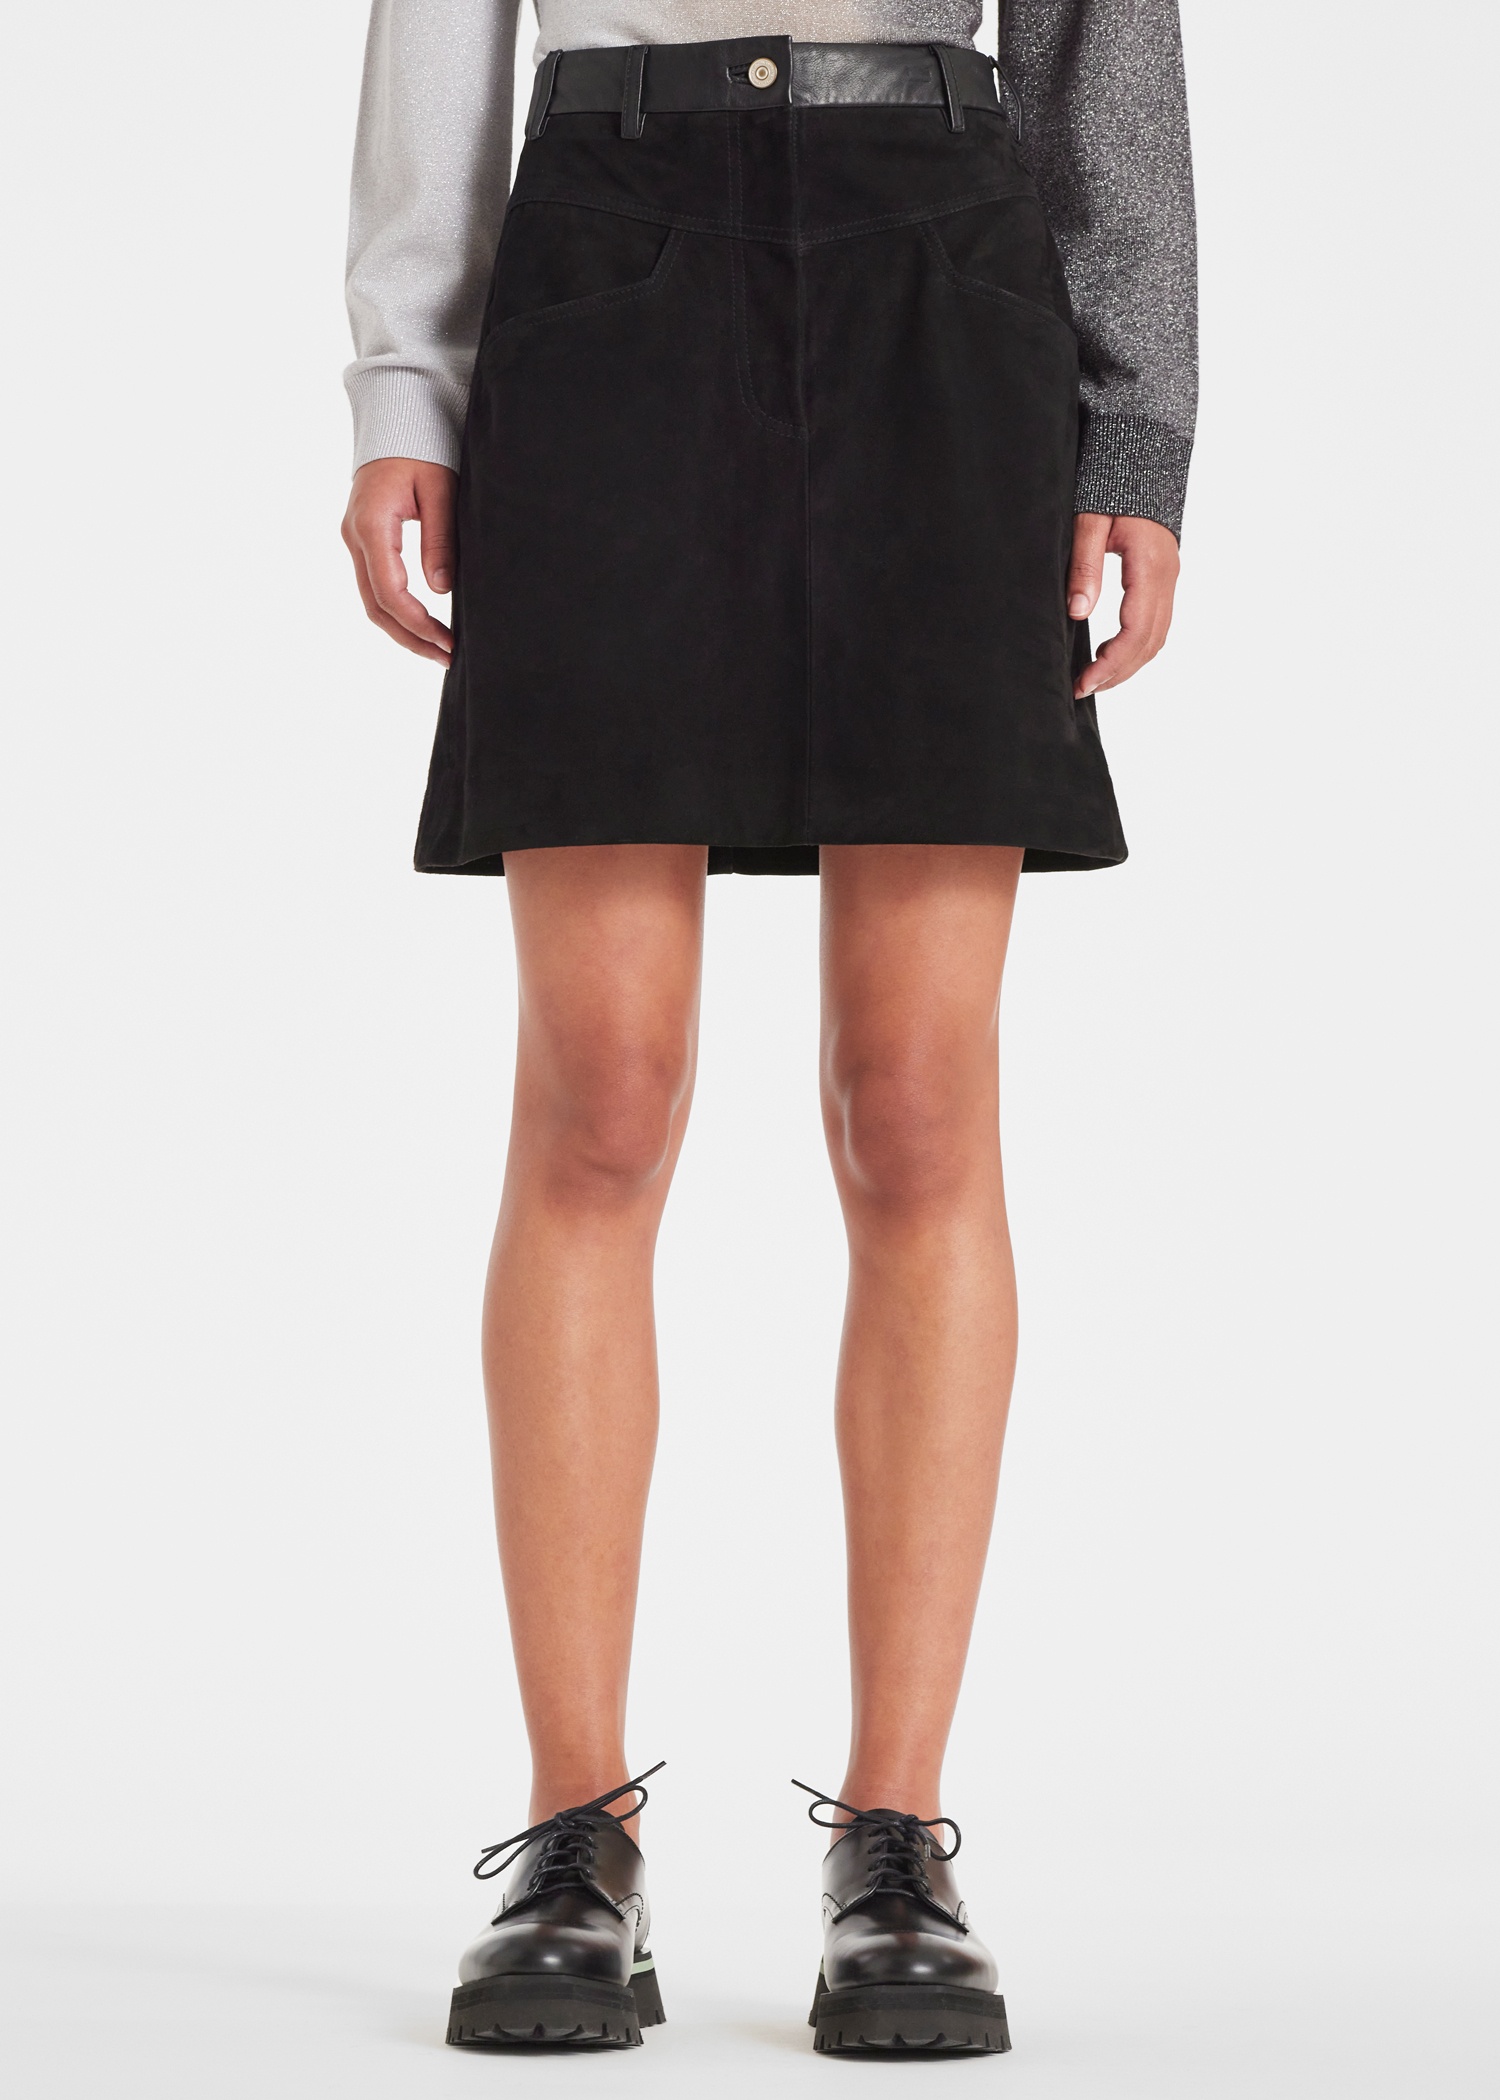 Women's Black Suede Contrasting Short Skirt - 5